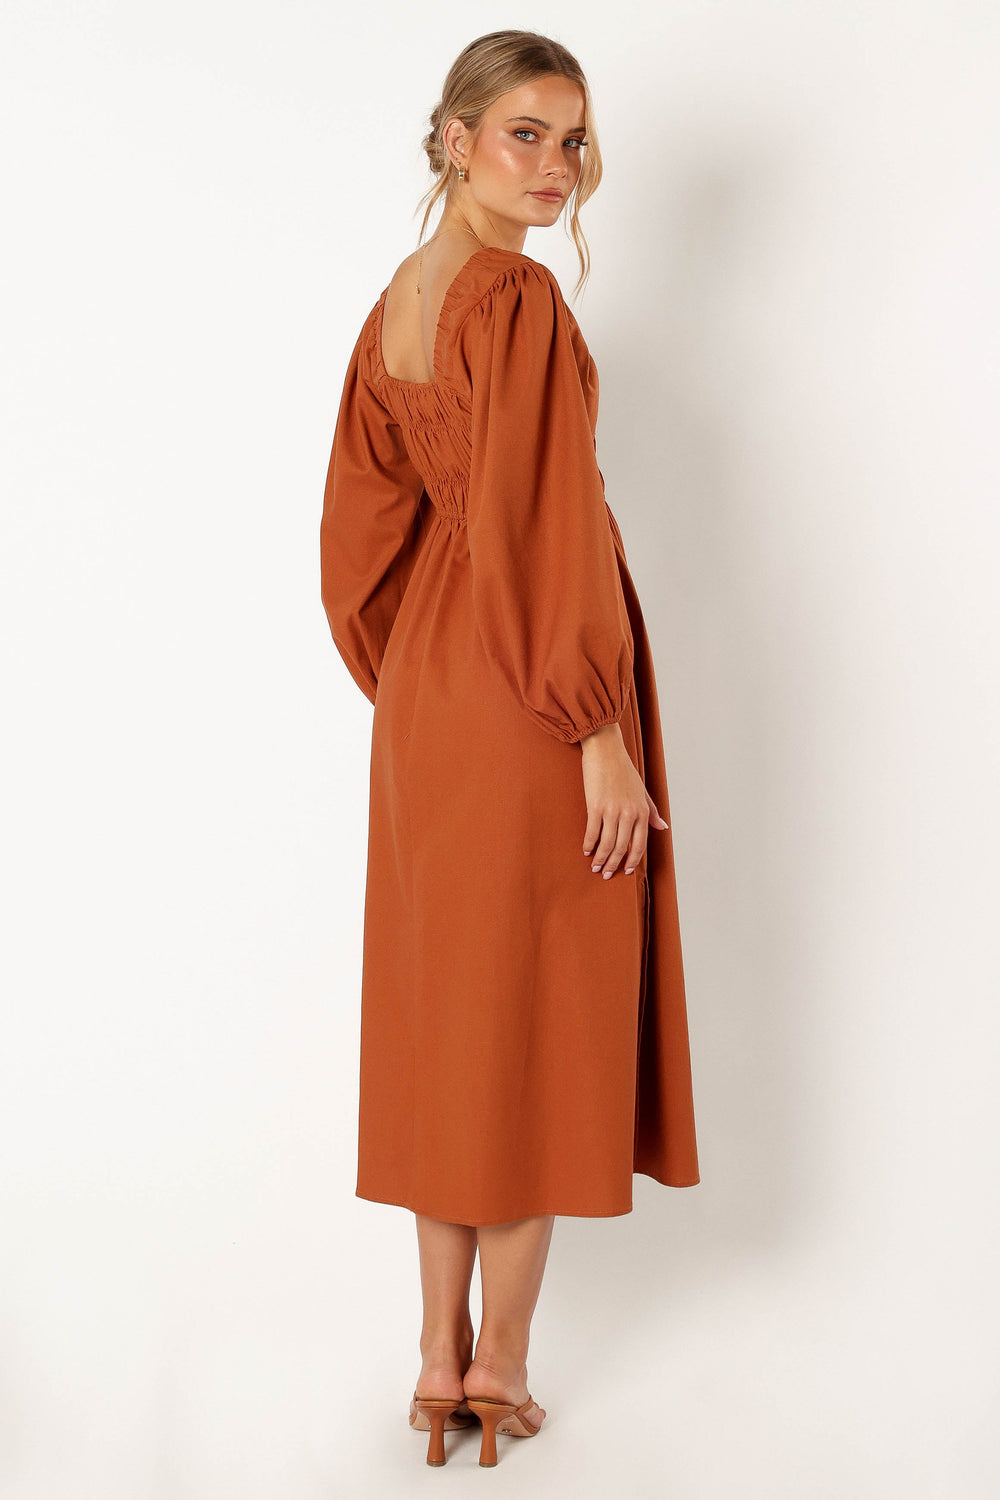 Petal and Pup USA DRESSES Zaylee Long Sleeve Midi Dress - Rust